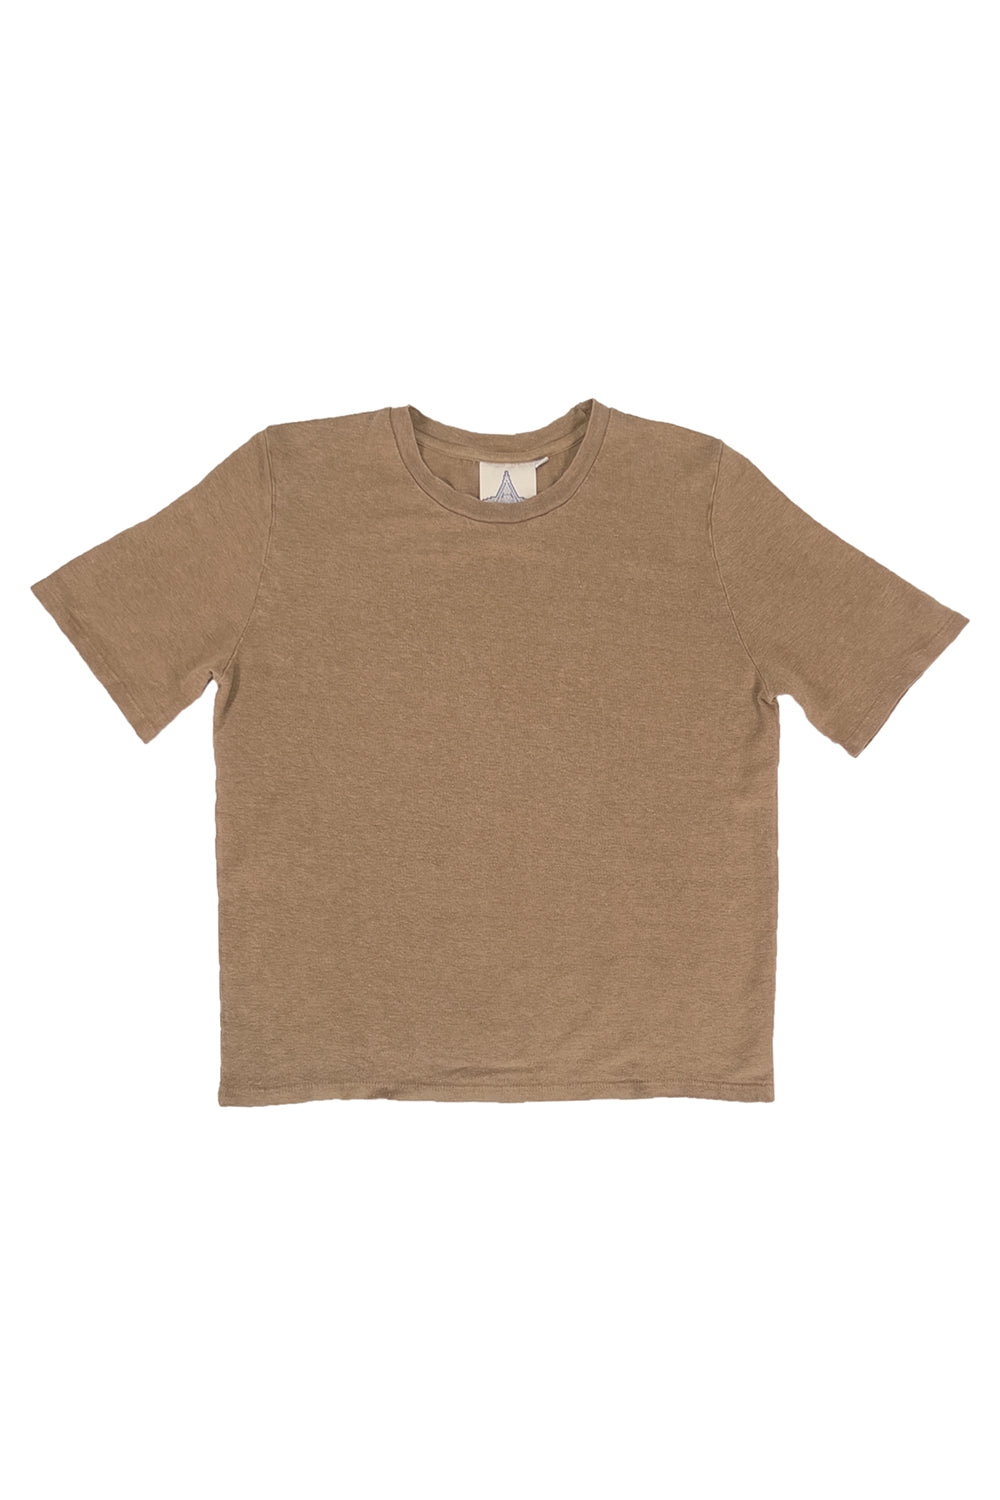 Cropped Hemp Tank Top | Jungmaven Hemp Clothing Coffee Bean / XL